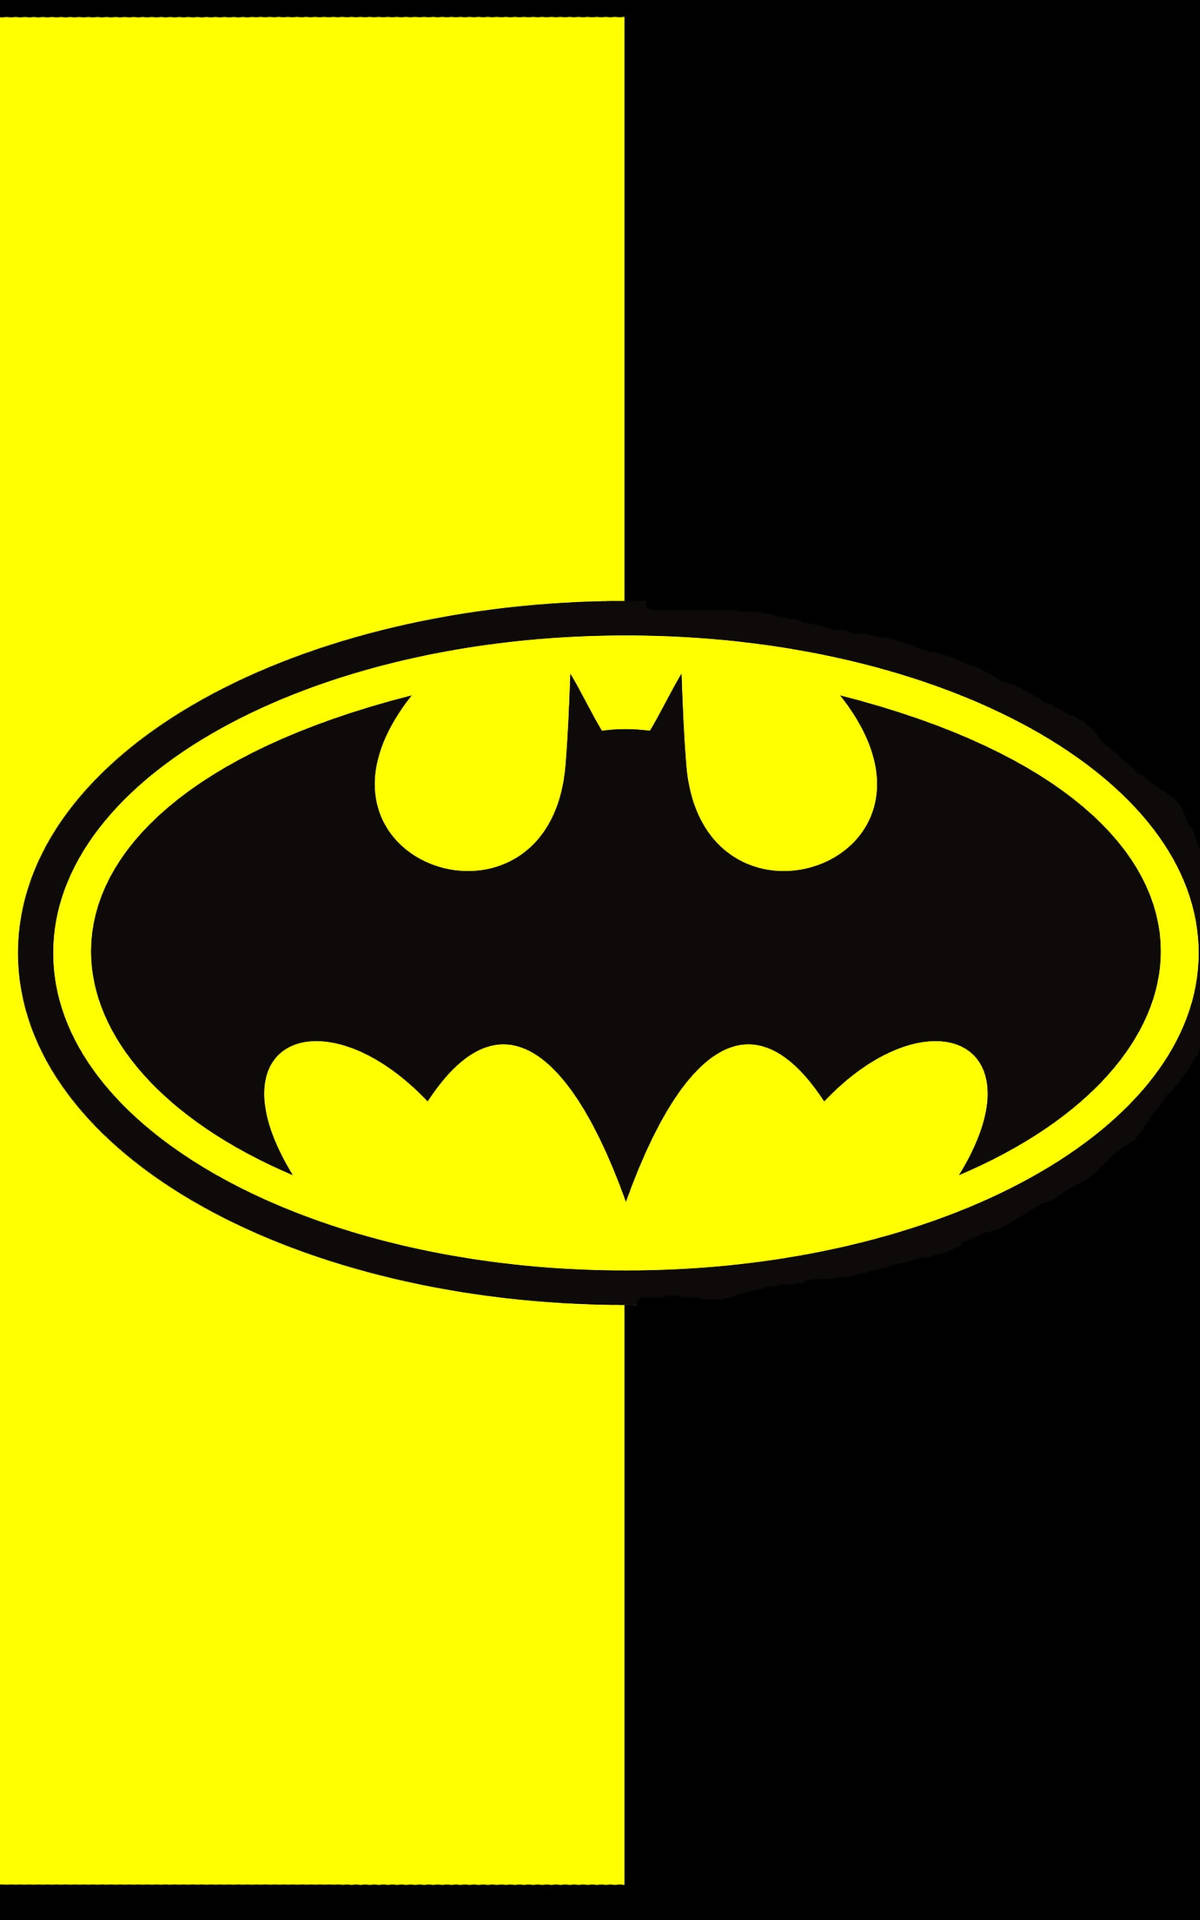 Batman Yellow Wallpapers  Batman wallpaper, Dc comics wallpaper, Batman  wallpaper iphone